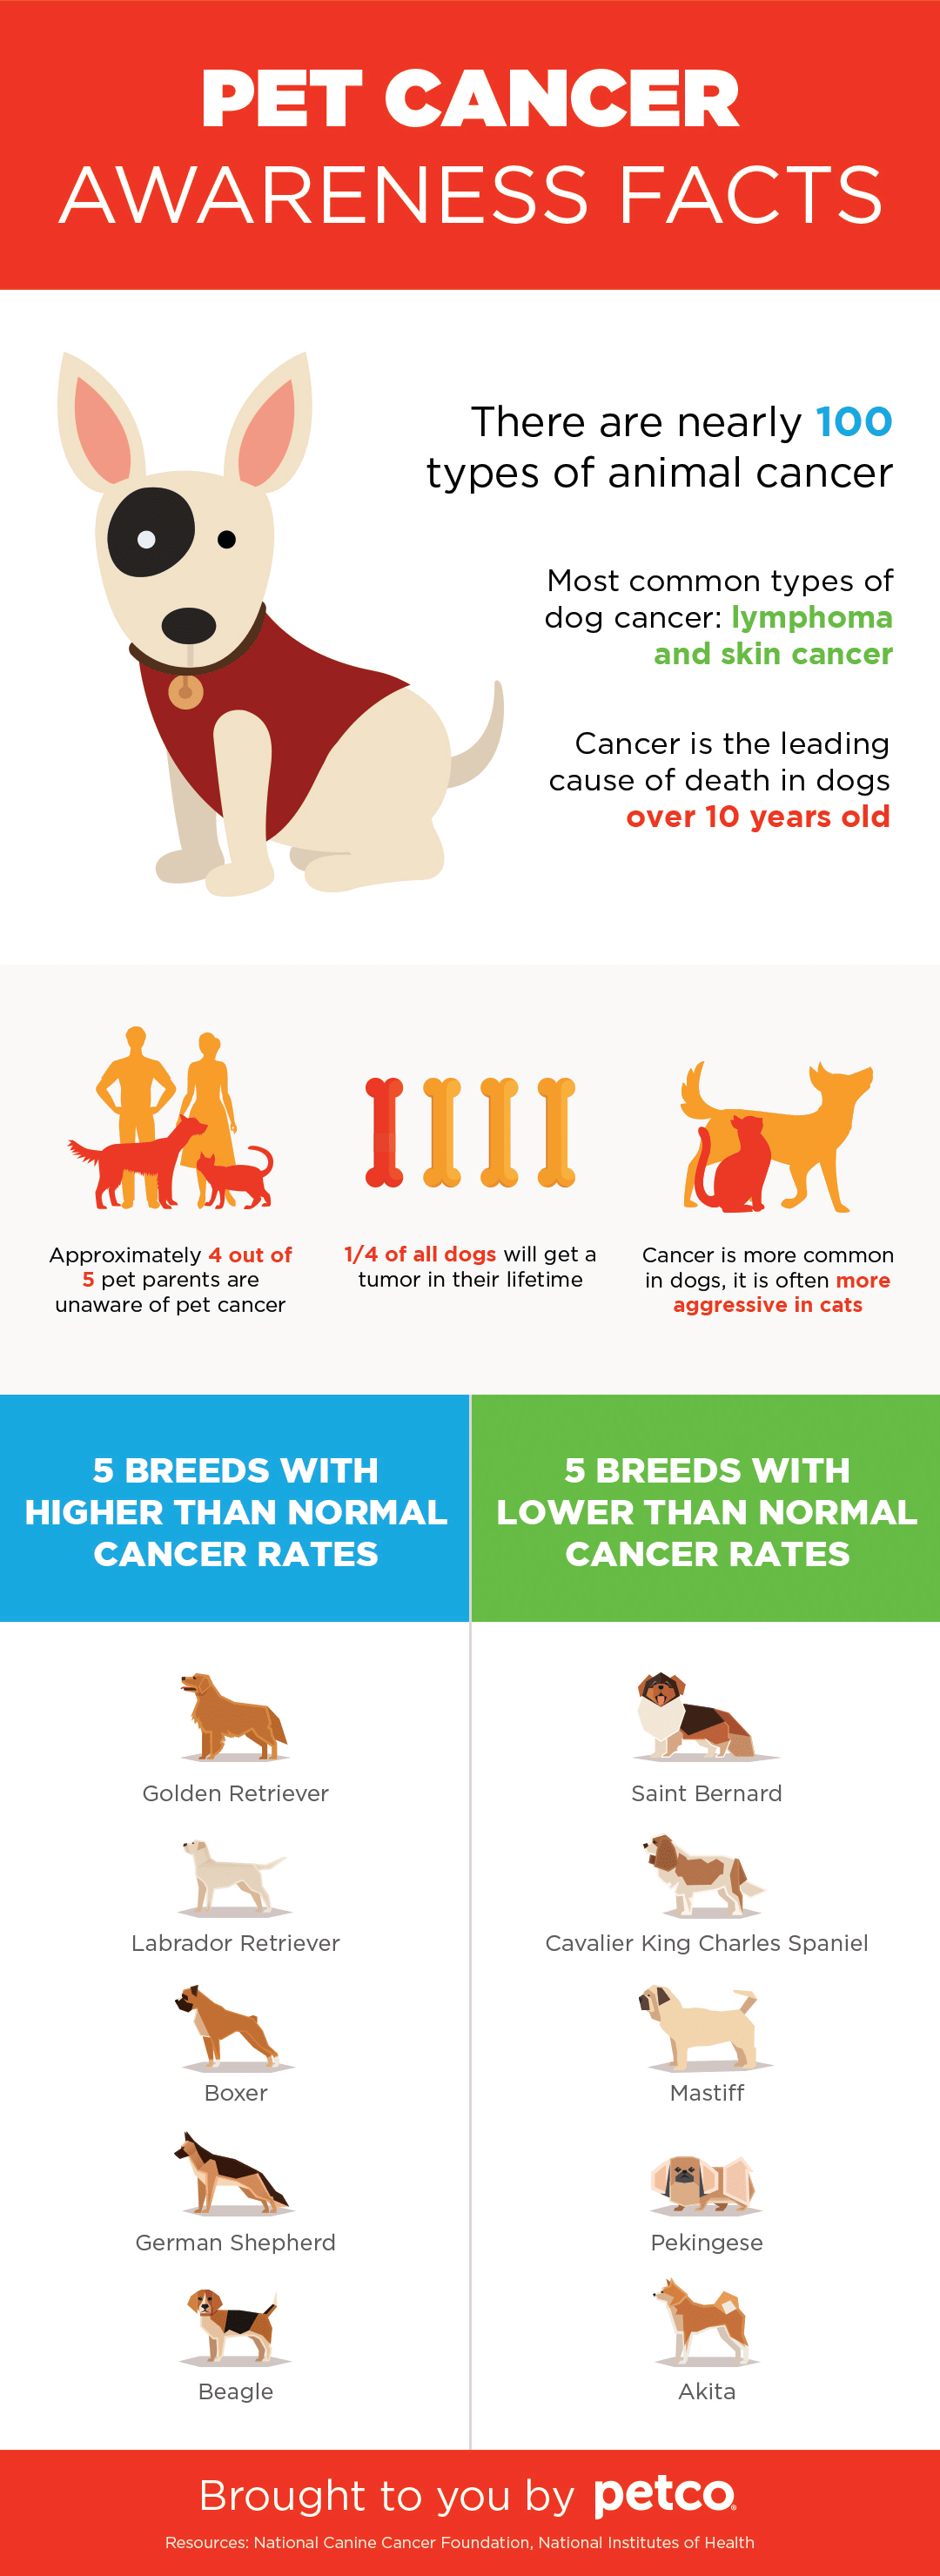 pet cancer awareness facts infographic